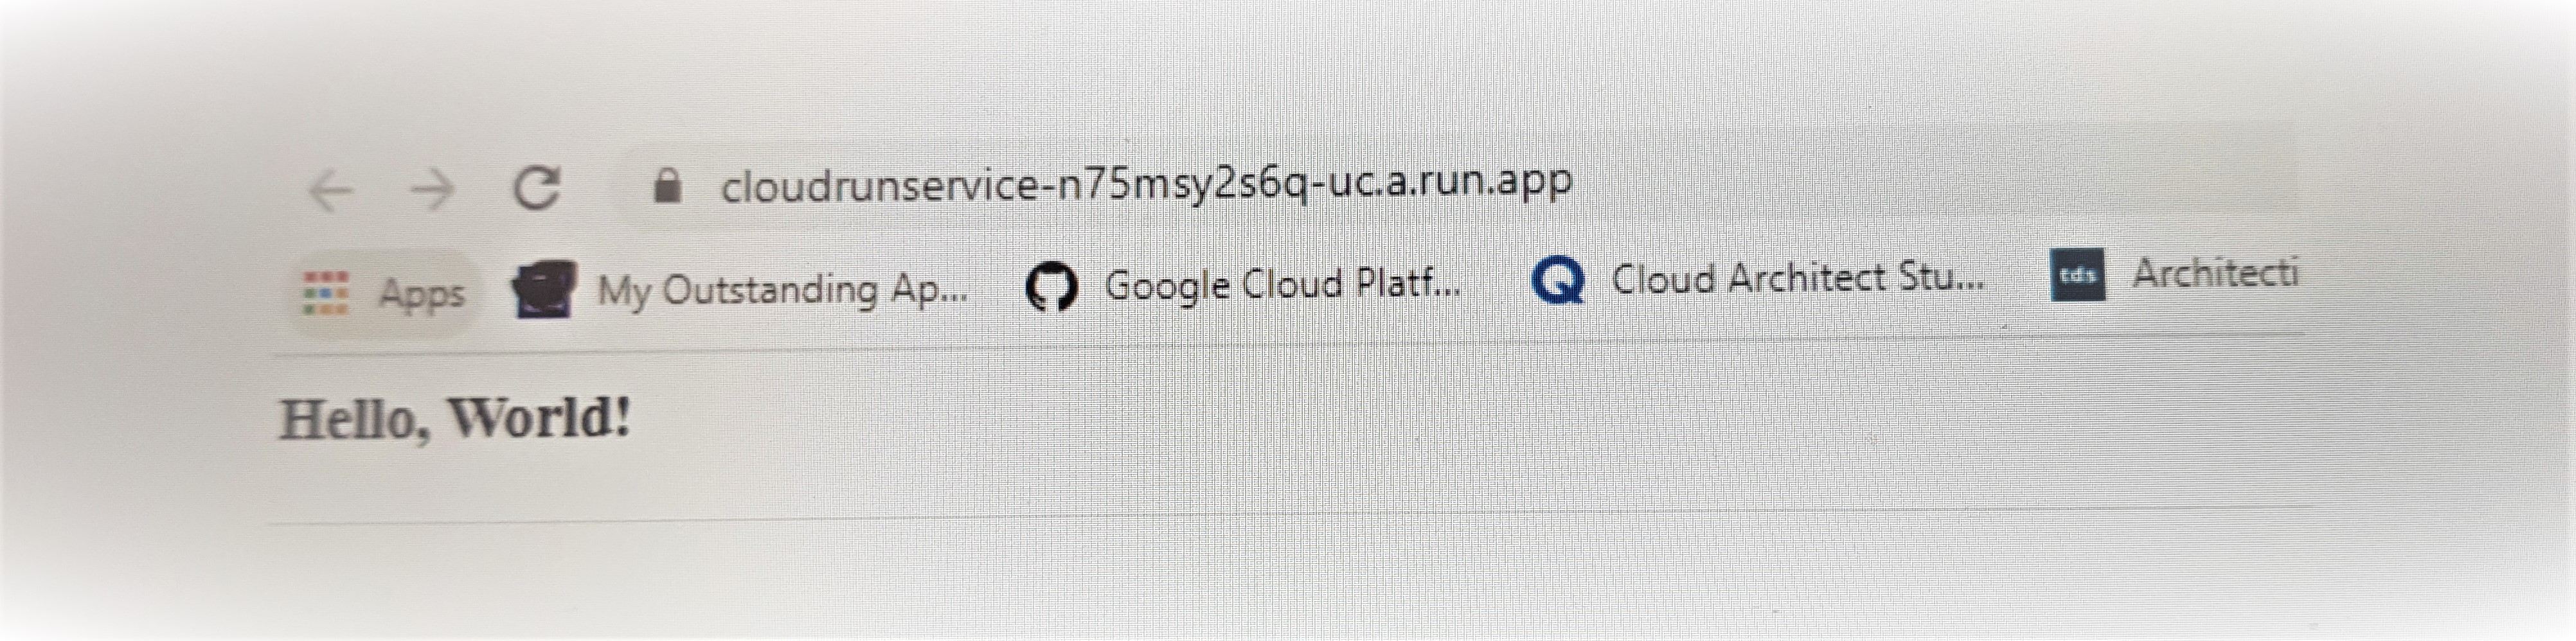 cloudrunservice